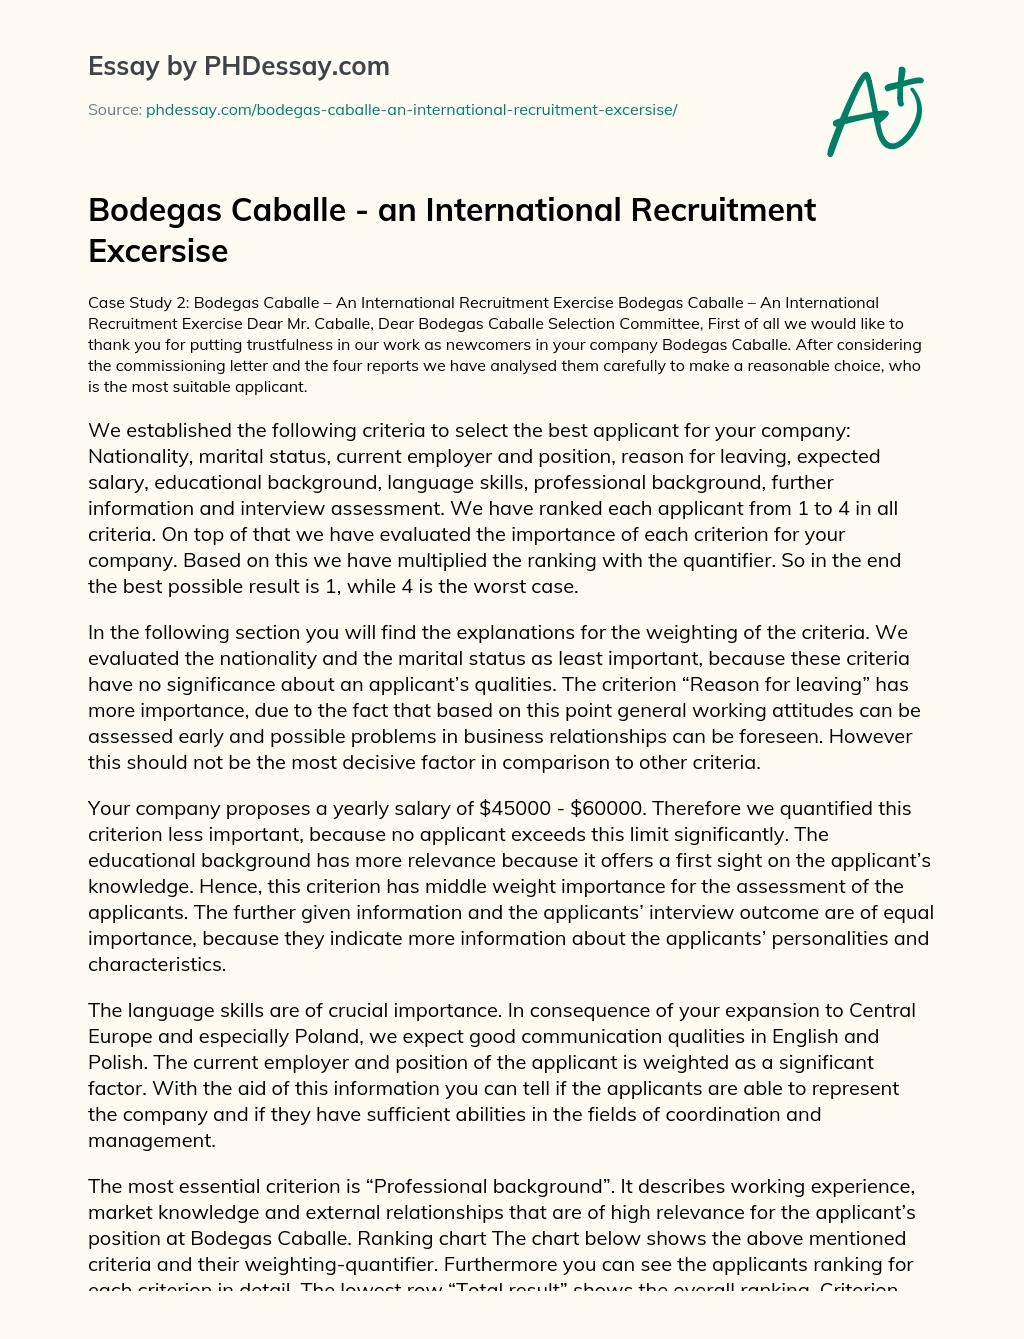 Bodegas Caballe – an international recruitment excersise essay